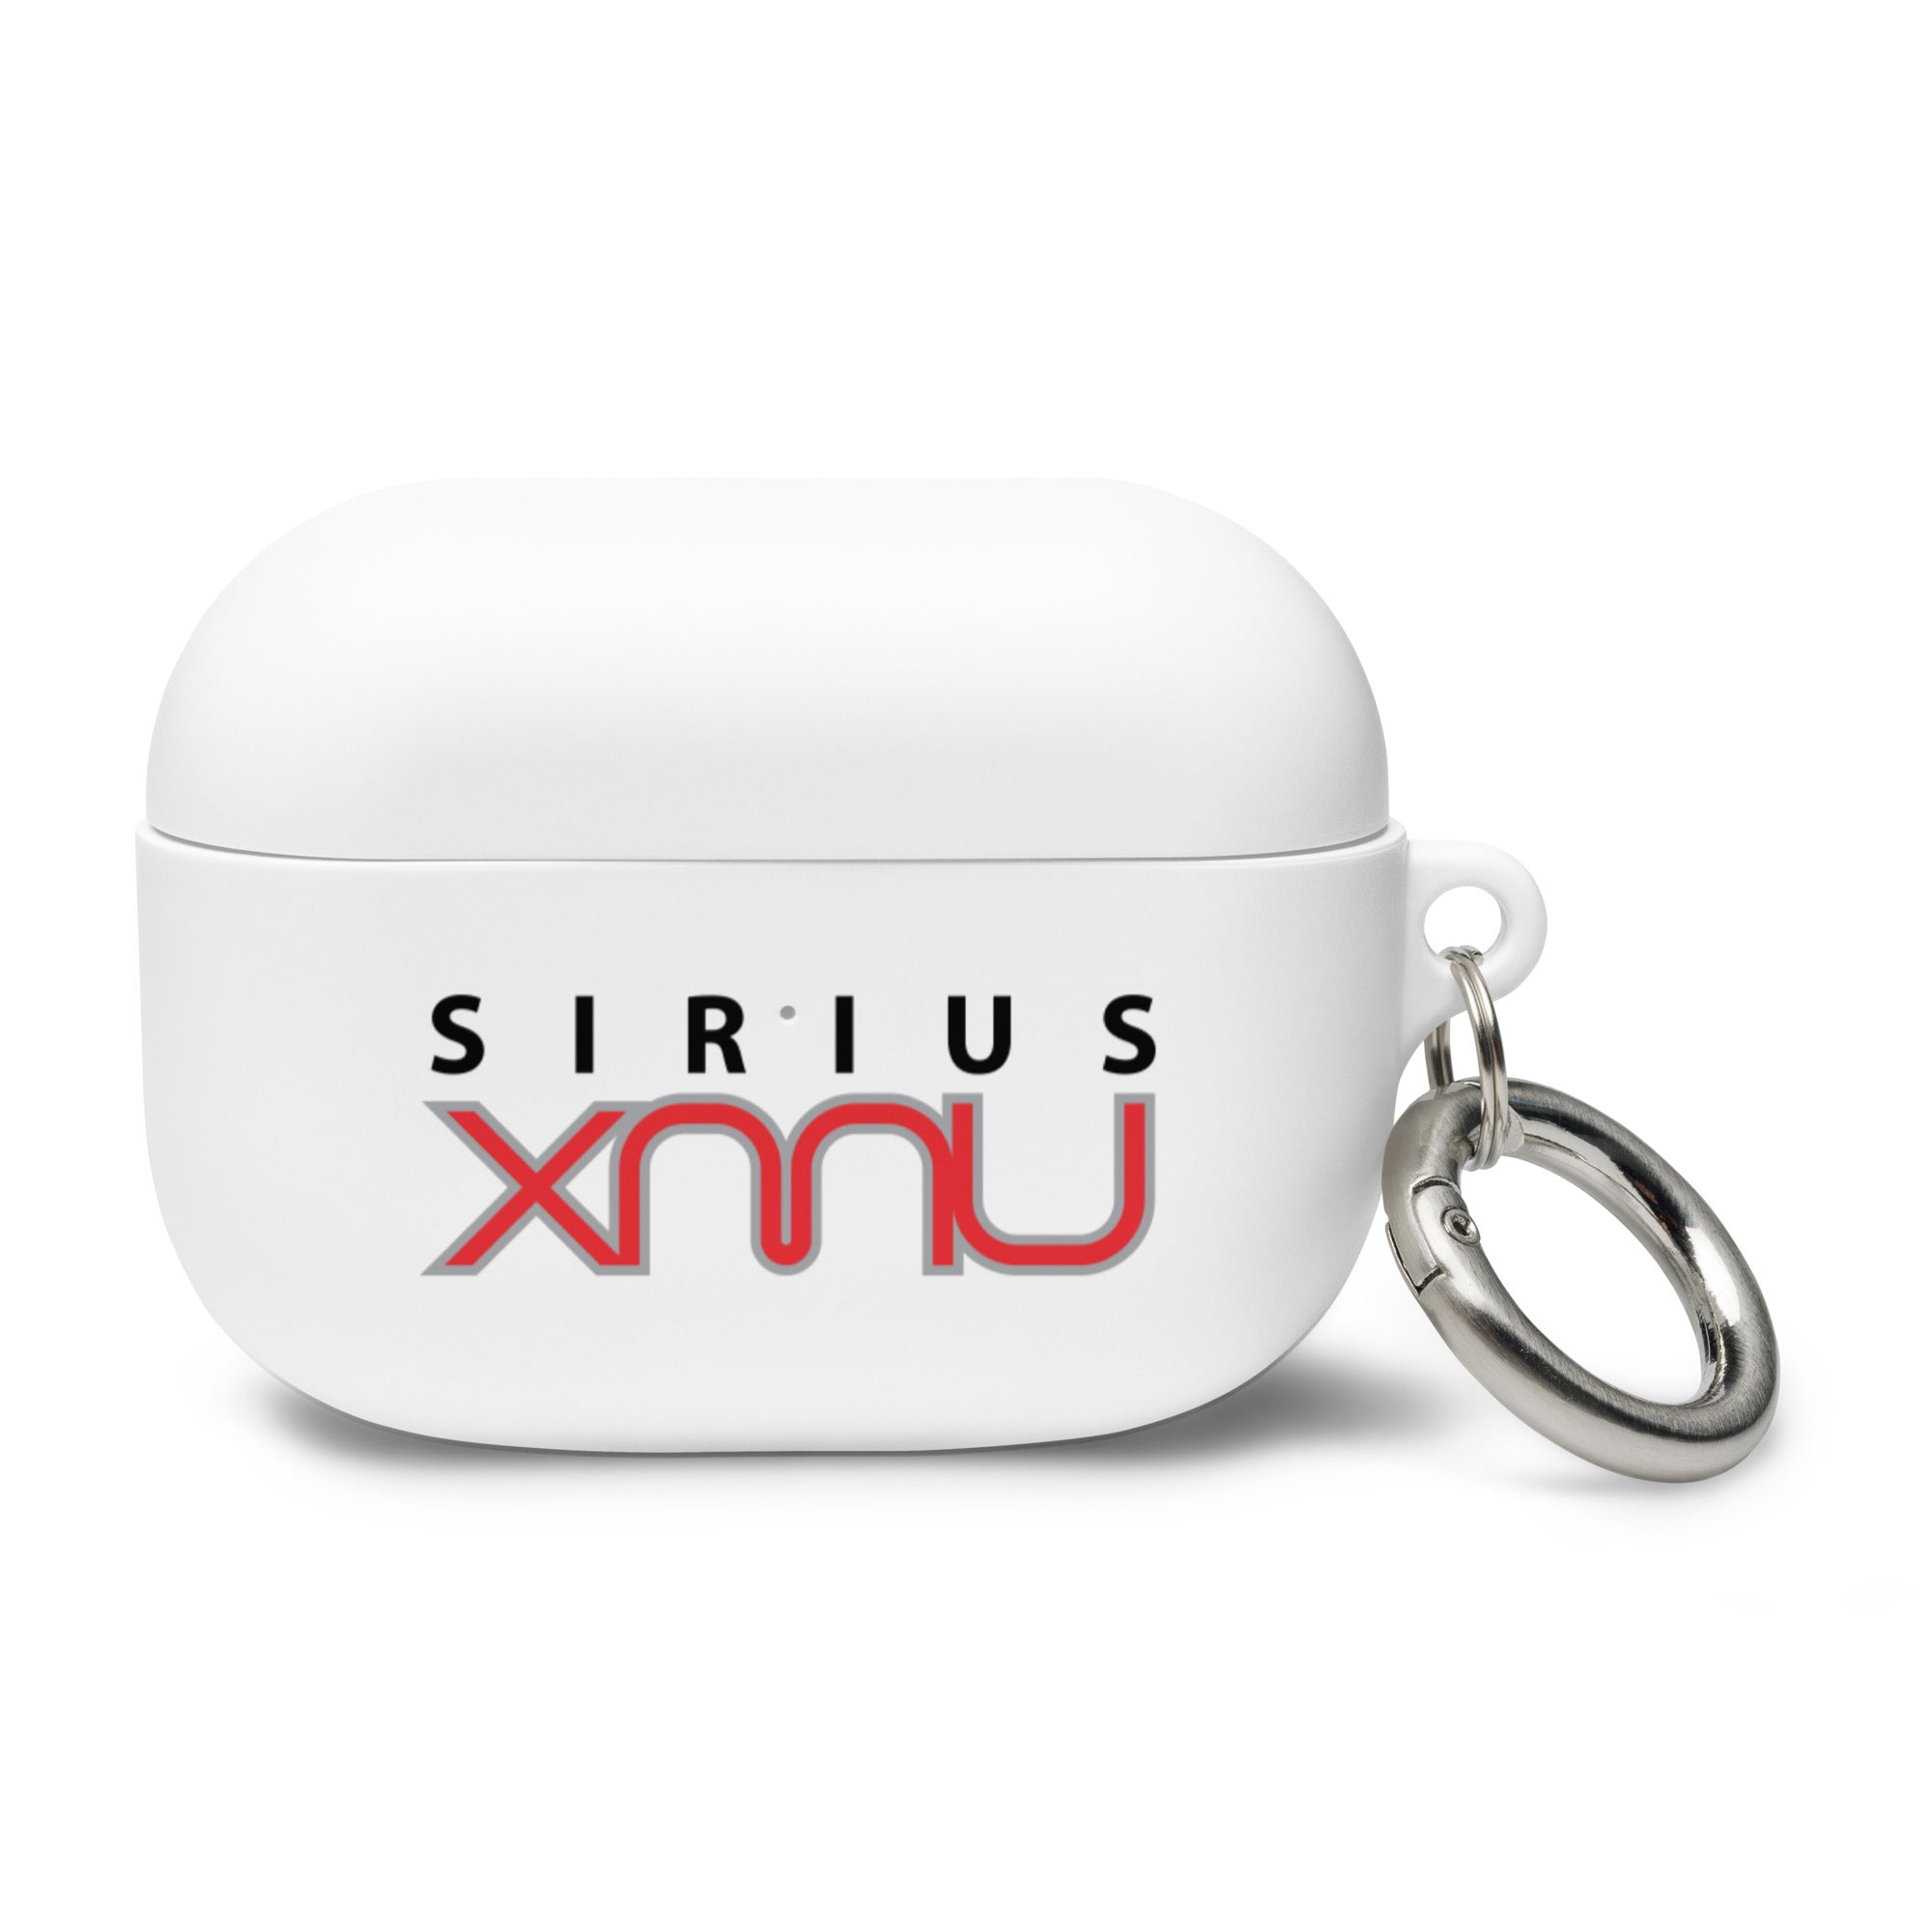 SiriusXMU: AirPods® Case Cover